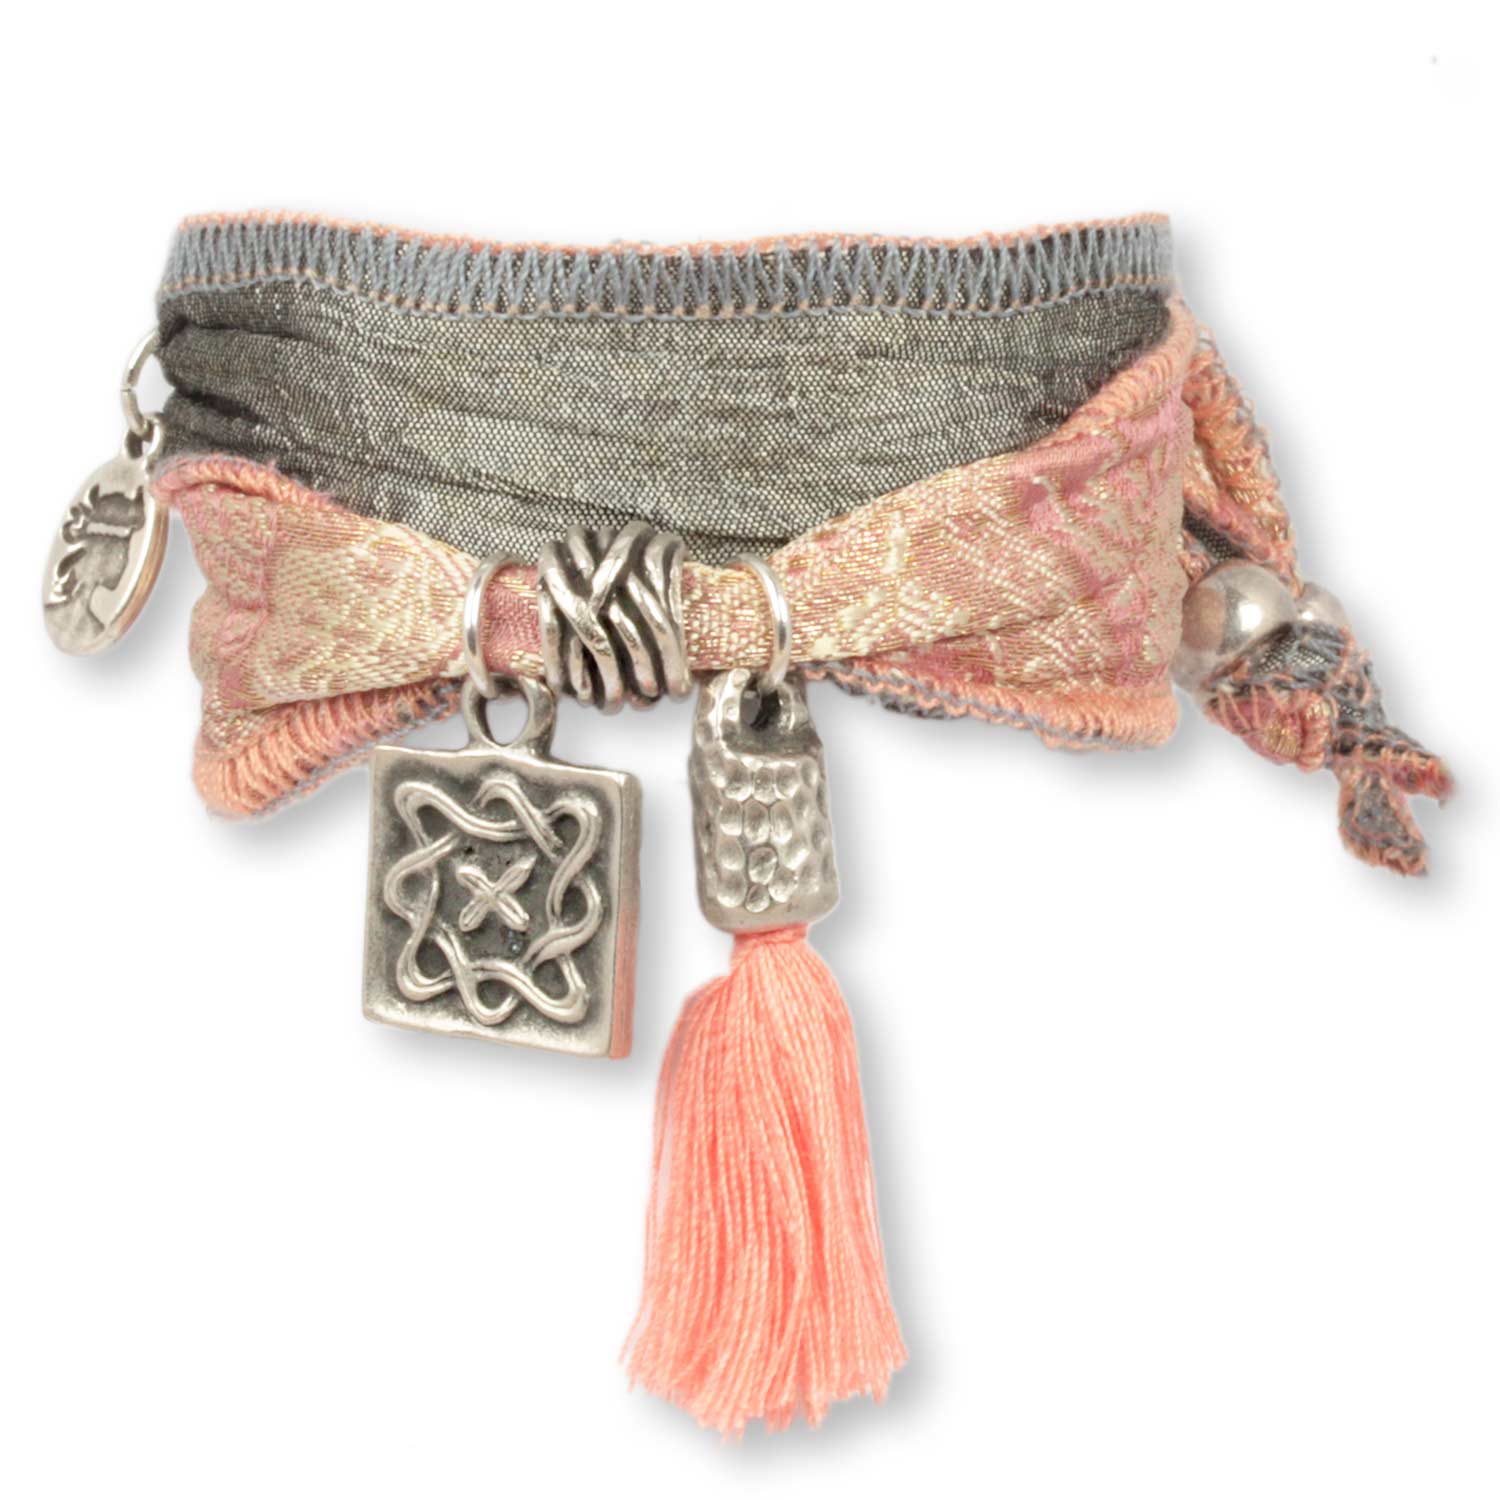 Flamingo Infinity Amulet - Armband aus indischen Saris